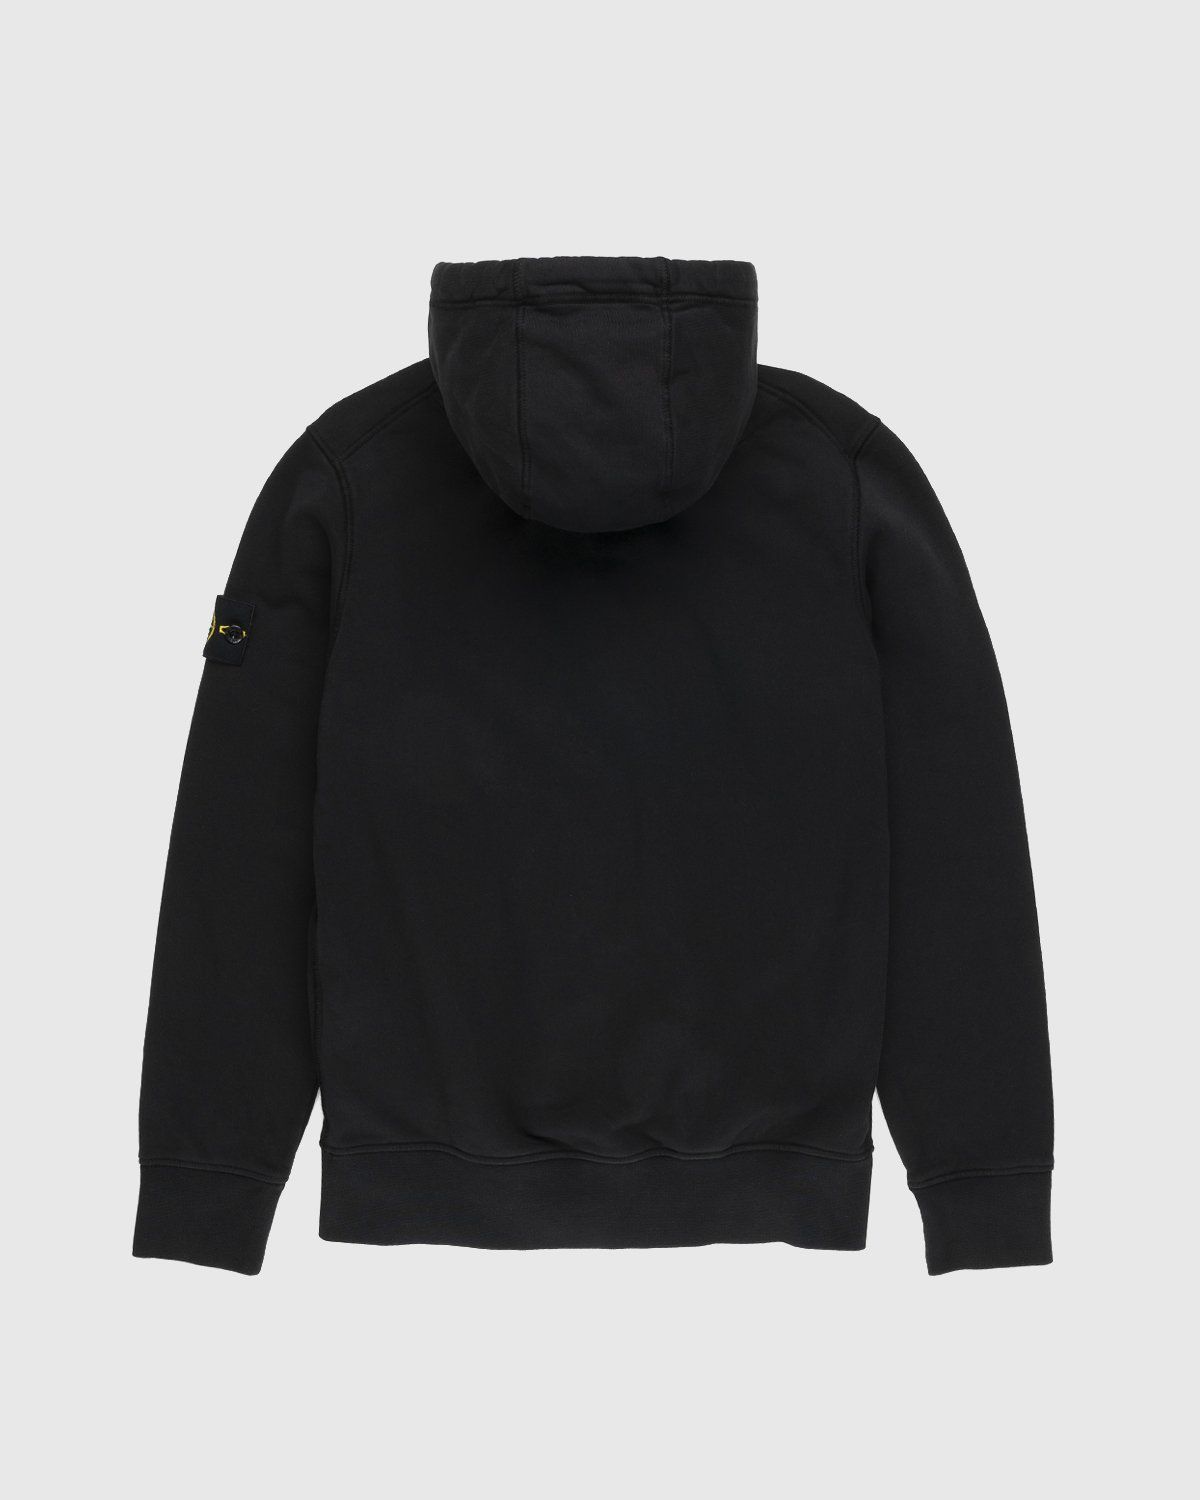 Stone Island – 64251 Garment-Dyed Full-Zip Hoodie Black - Zip-Up Sweats - Black - Image 2